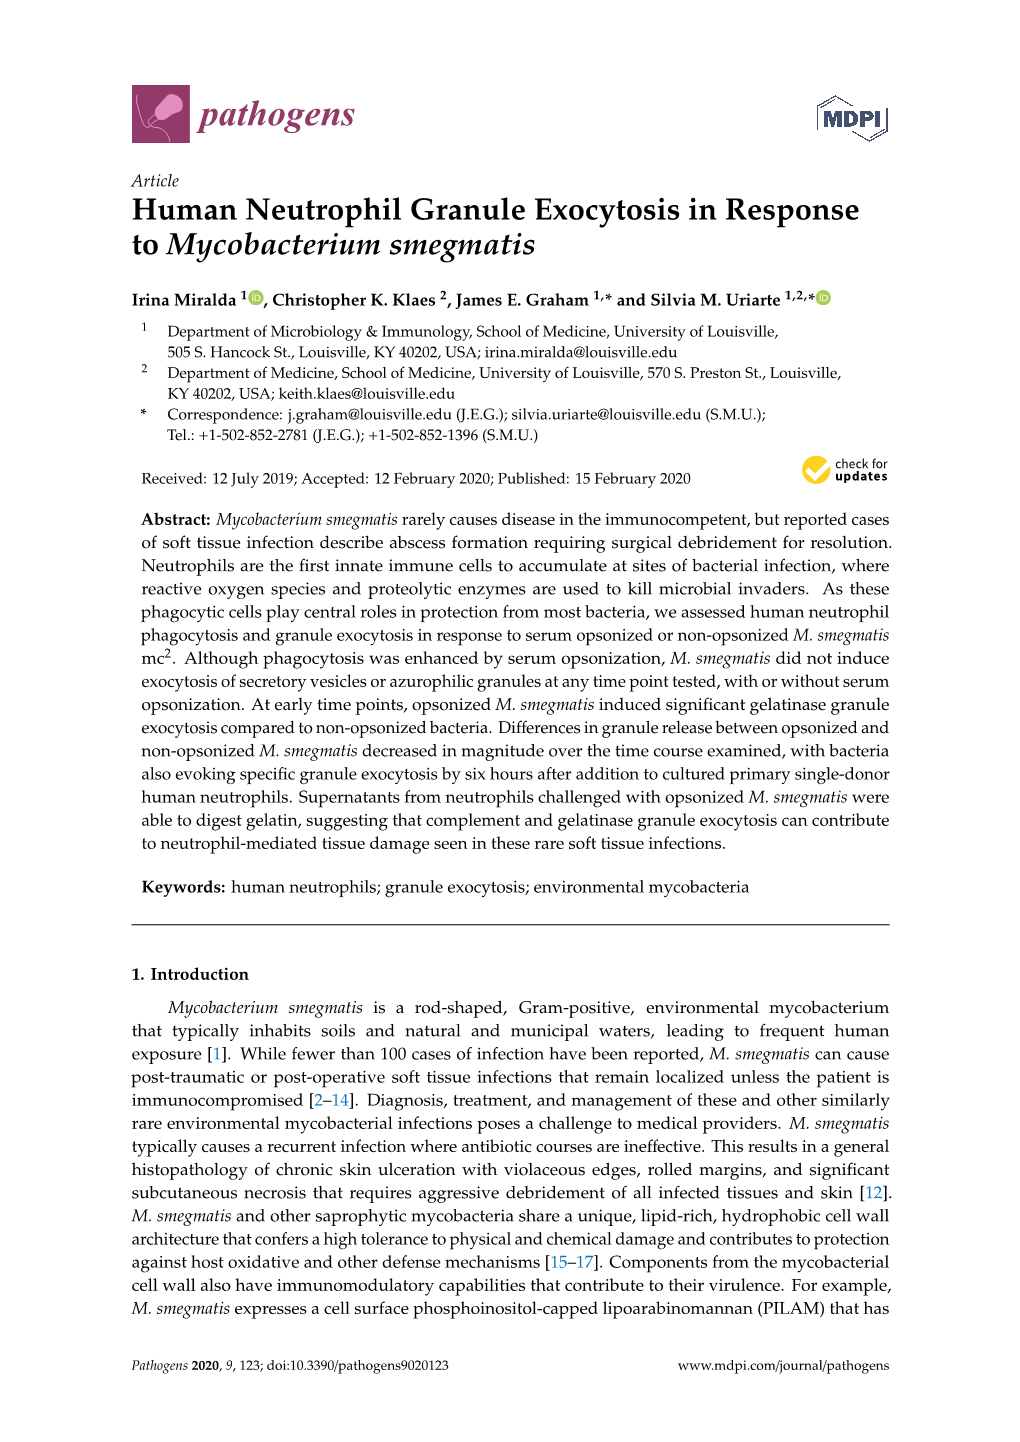 Human Neutrophil Granule Exocytosis in Response to Mycobacterium Smegmatis